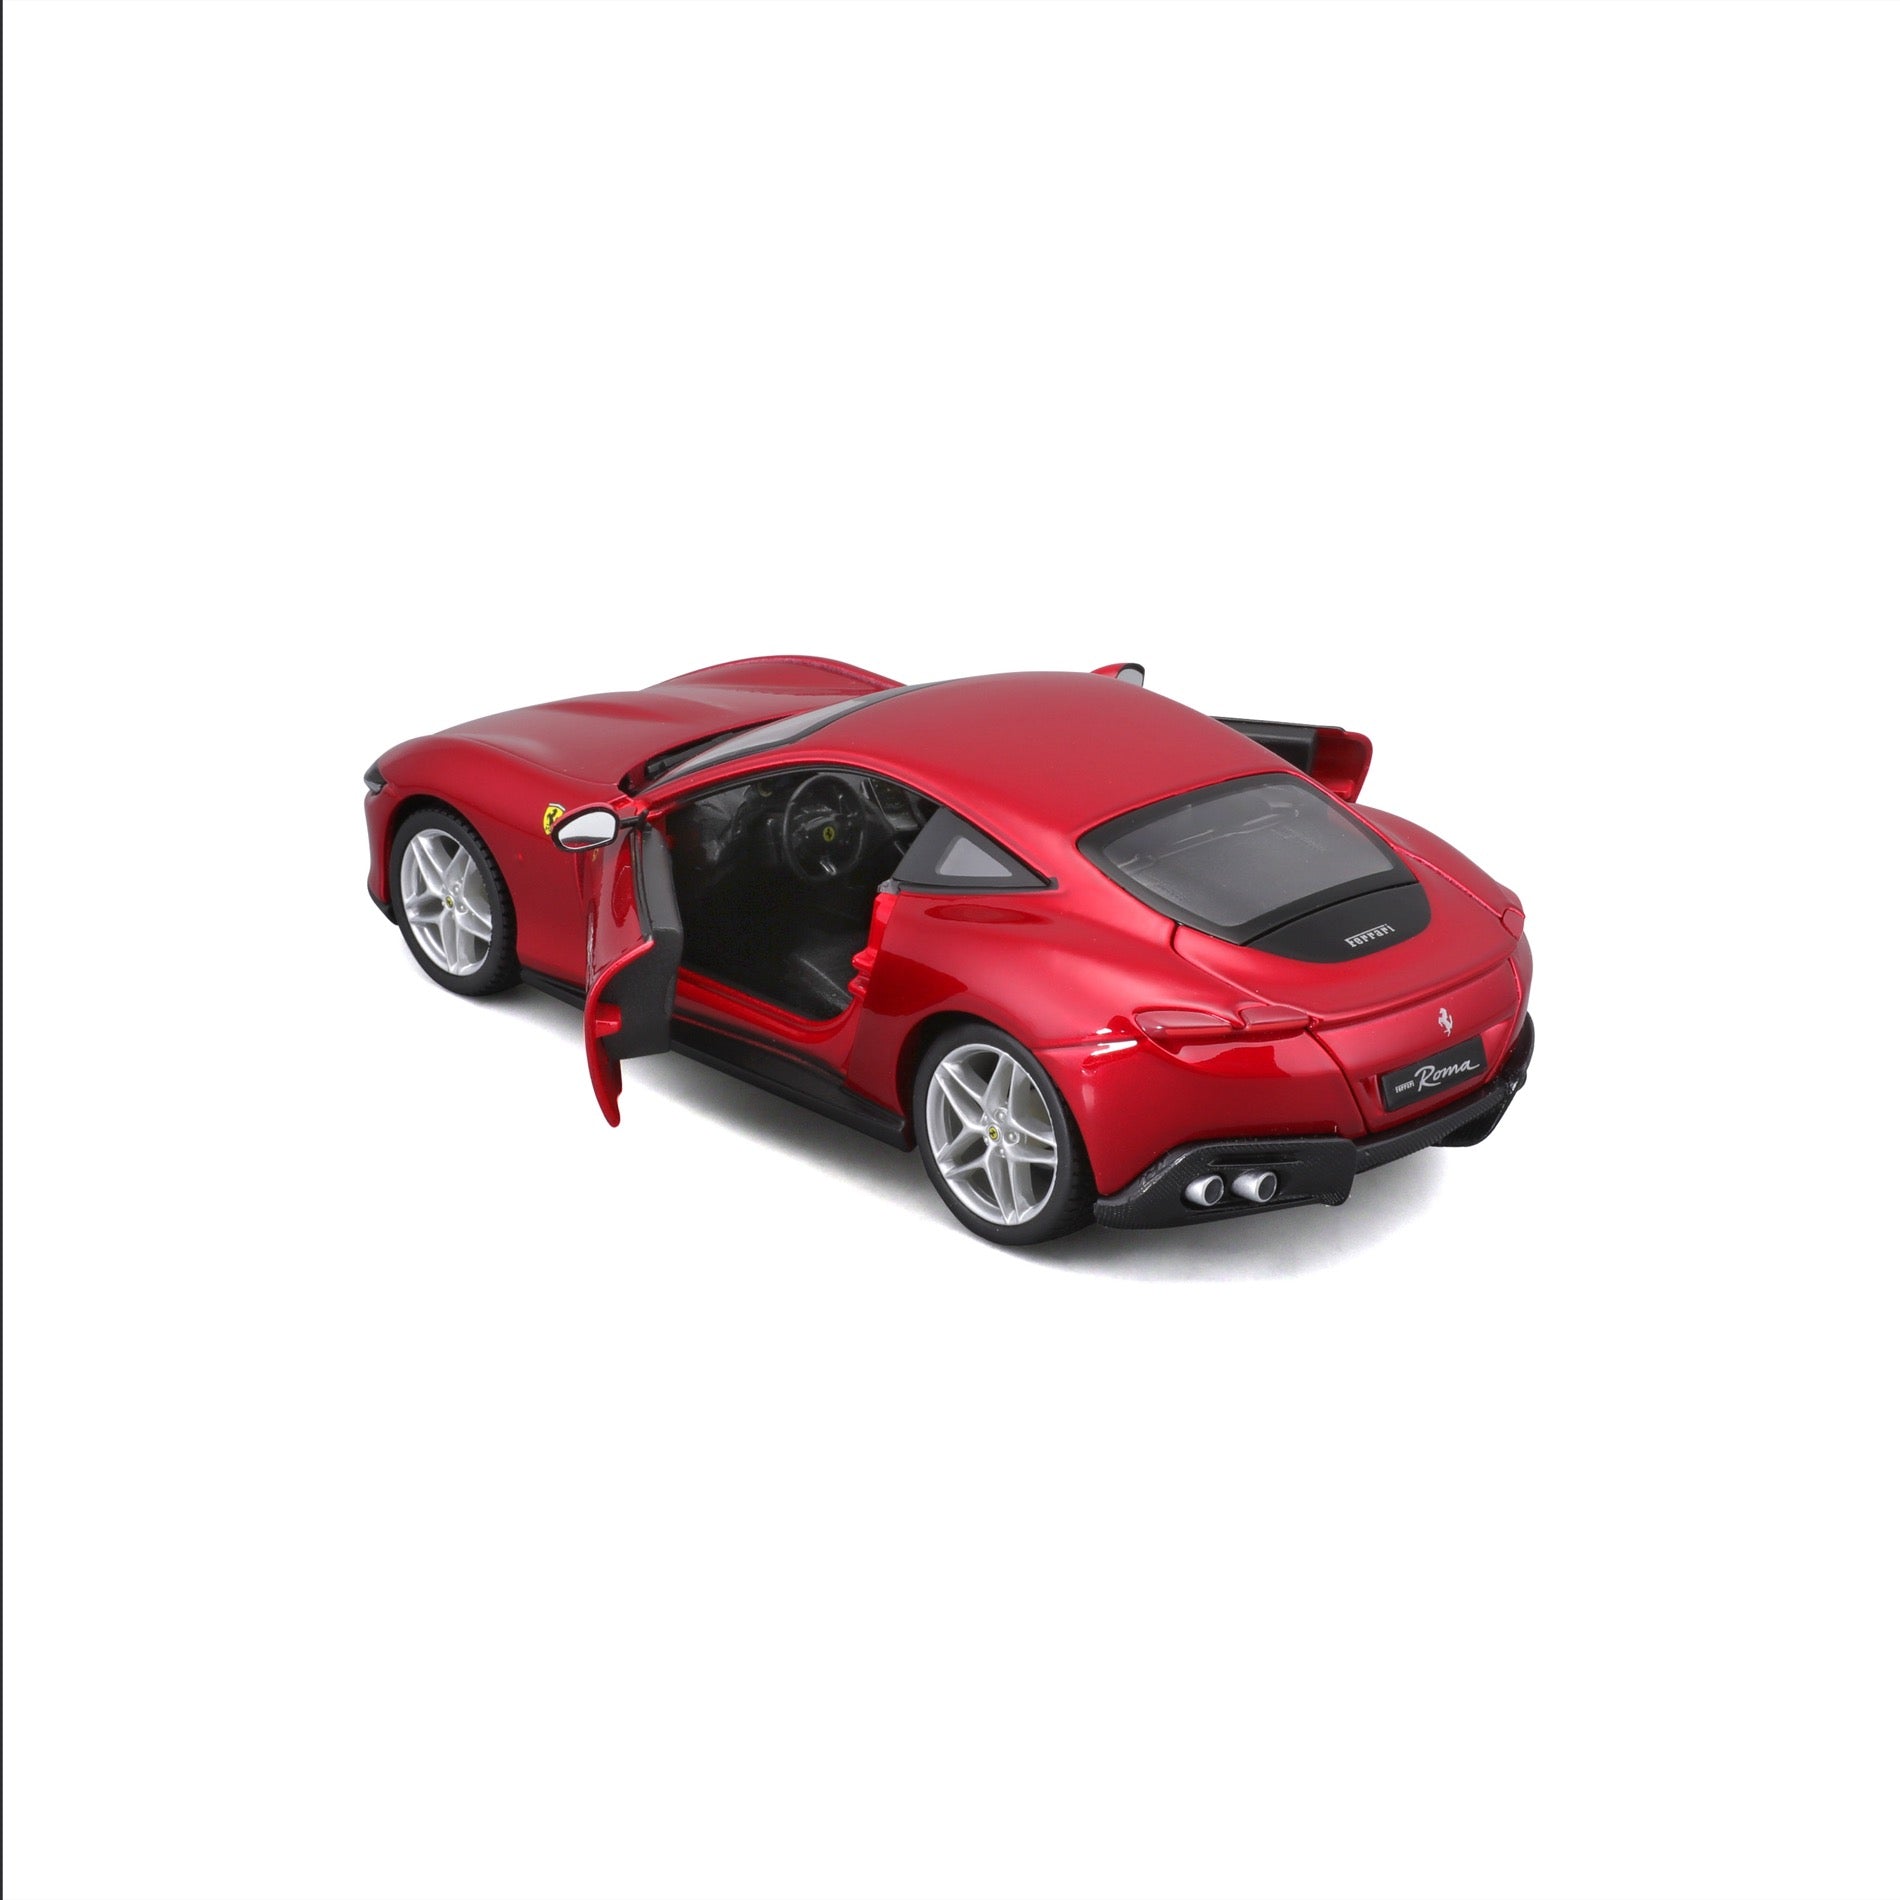 Burago - Véhicule miniature - Ferrari rouge 2013